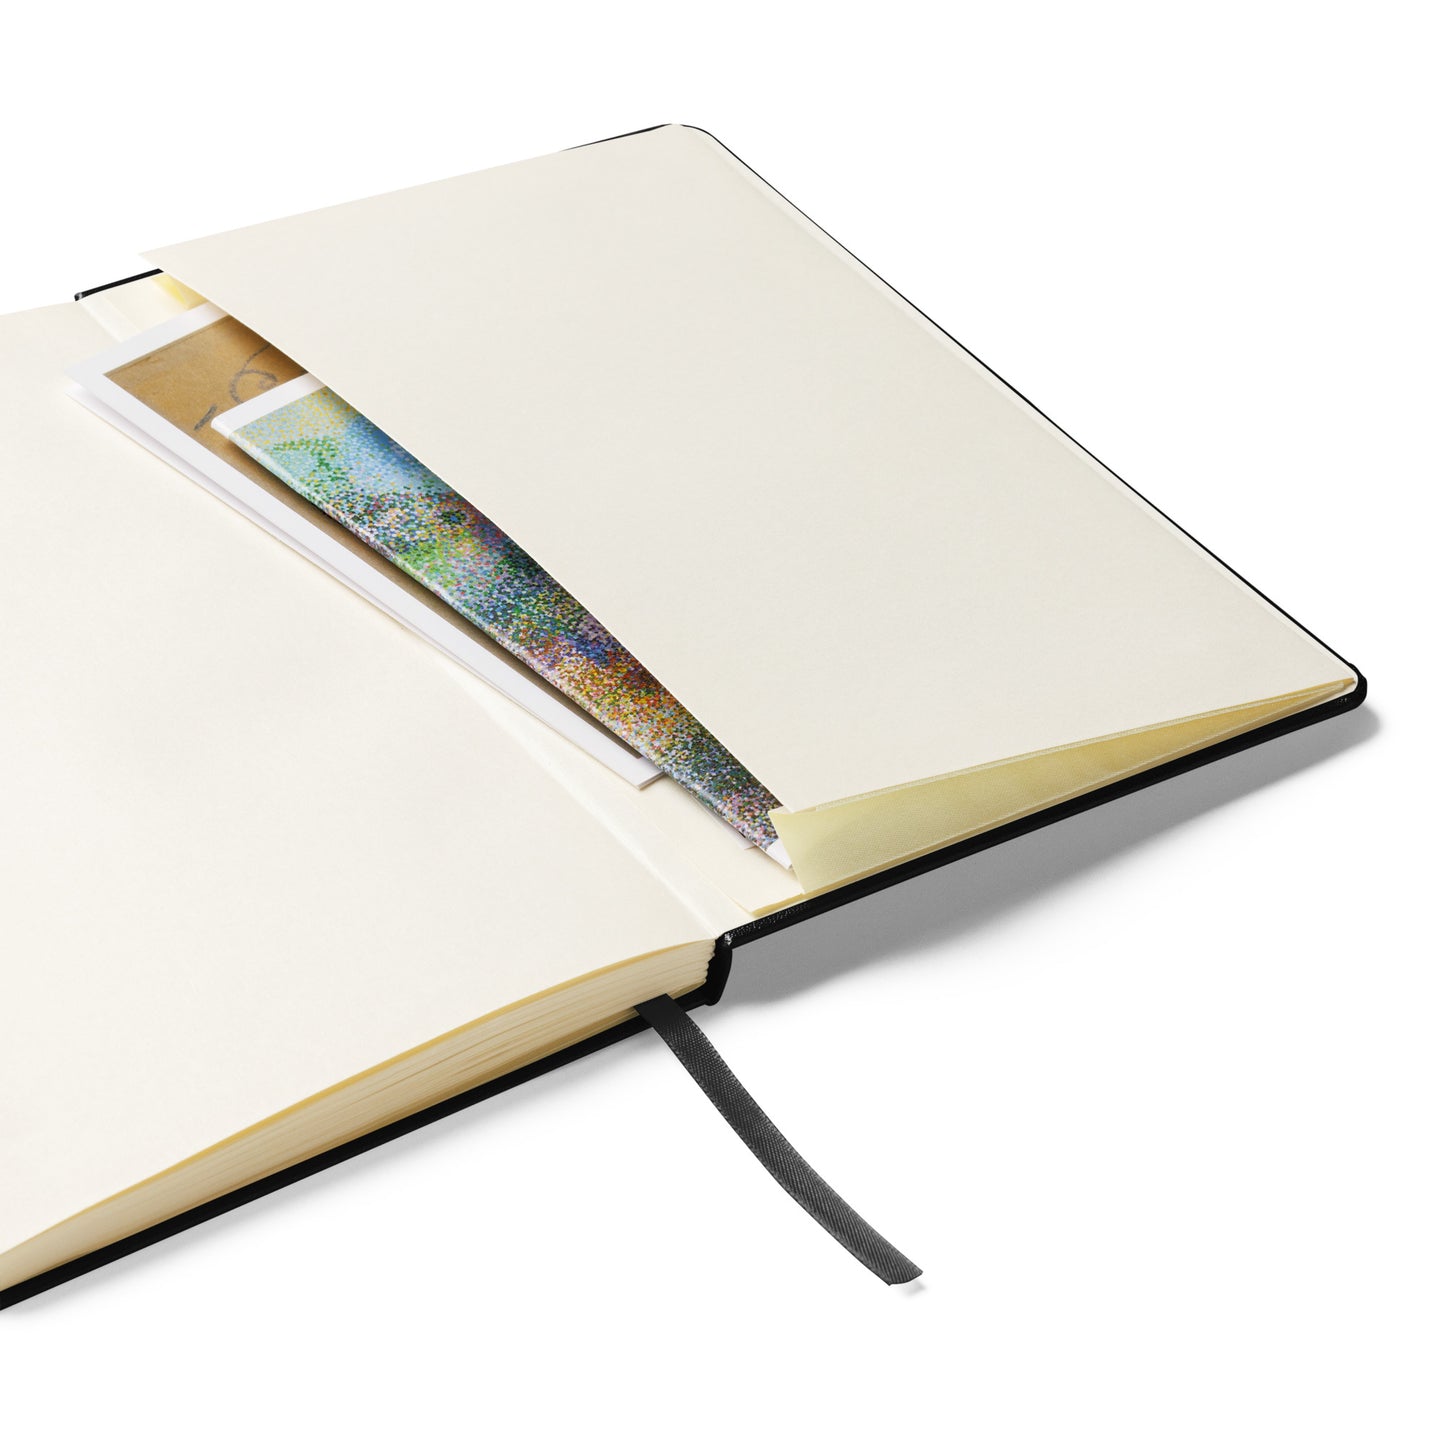 Iris hardcover bound notebook